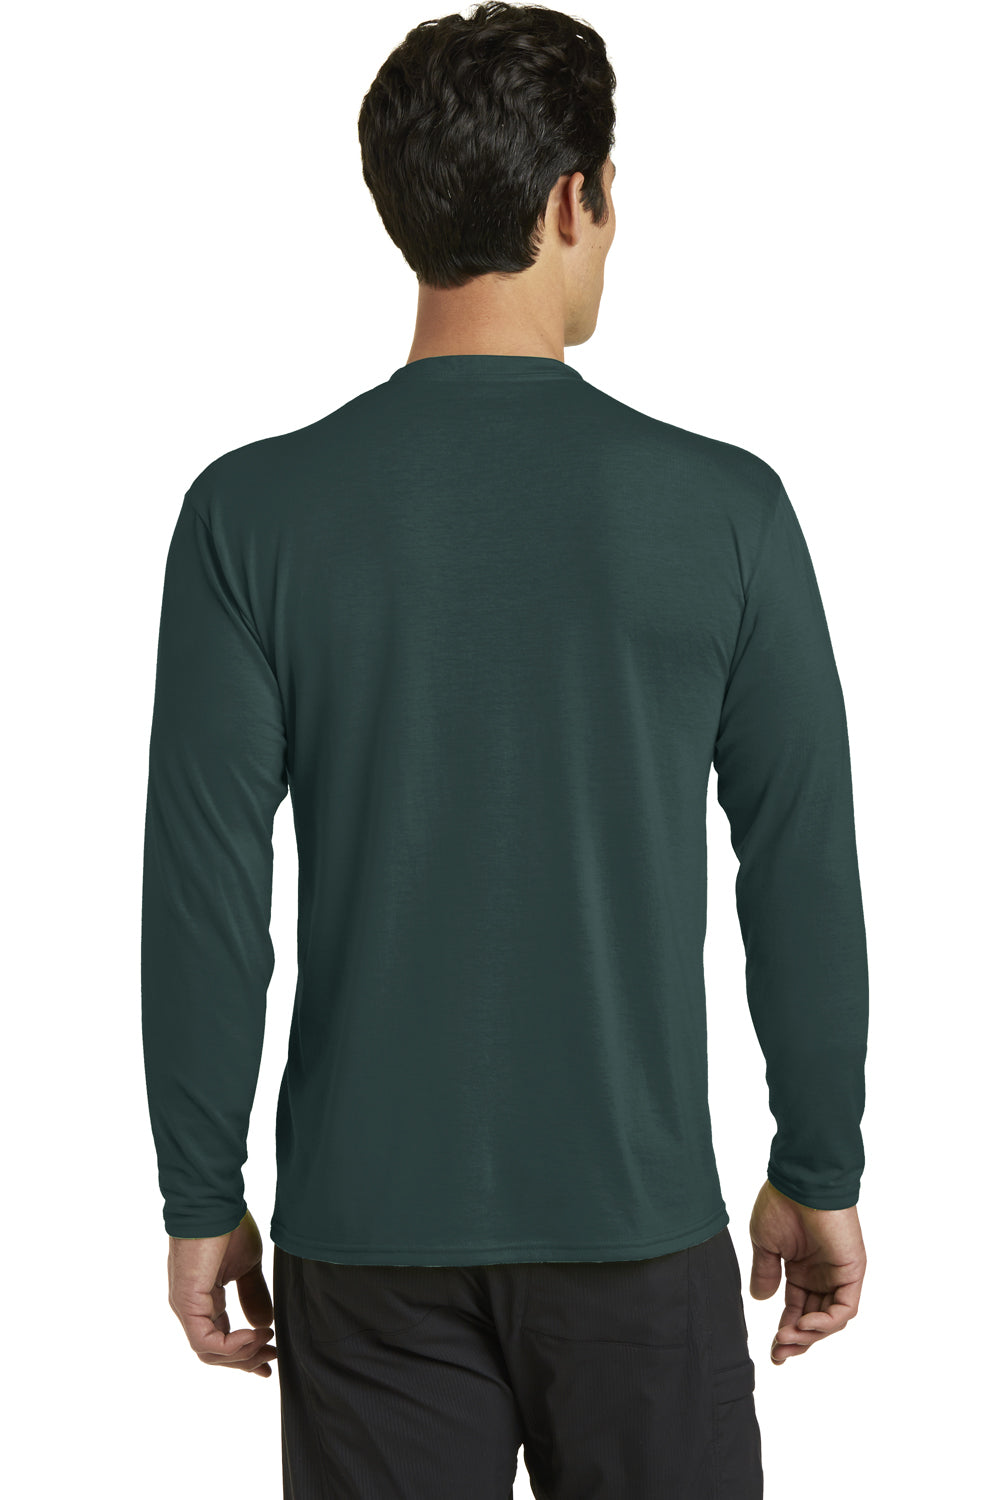 Port & Company PC381LS Mens Dry Zone Performance Moisture Wicking Long Sleeve Crewneck T-Shirt Dark Green Back